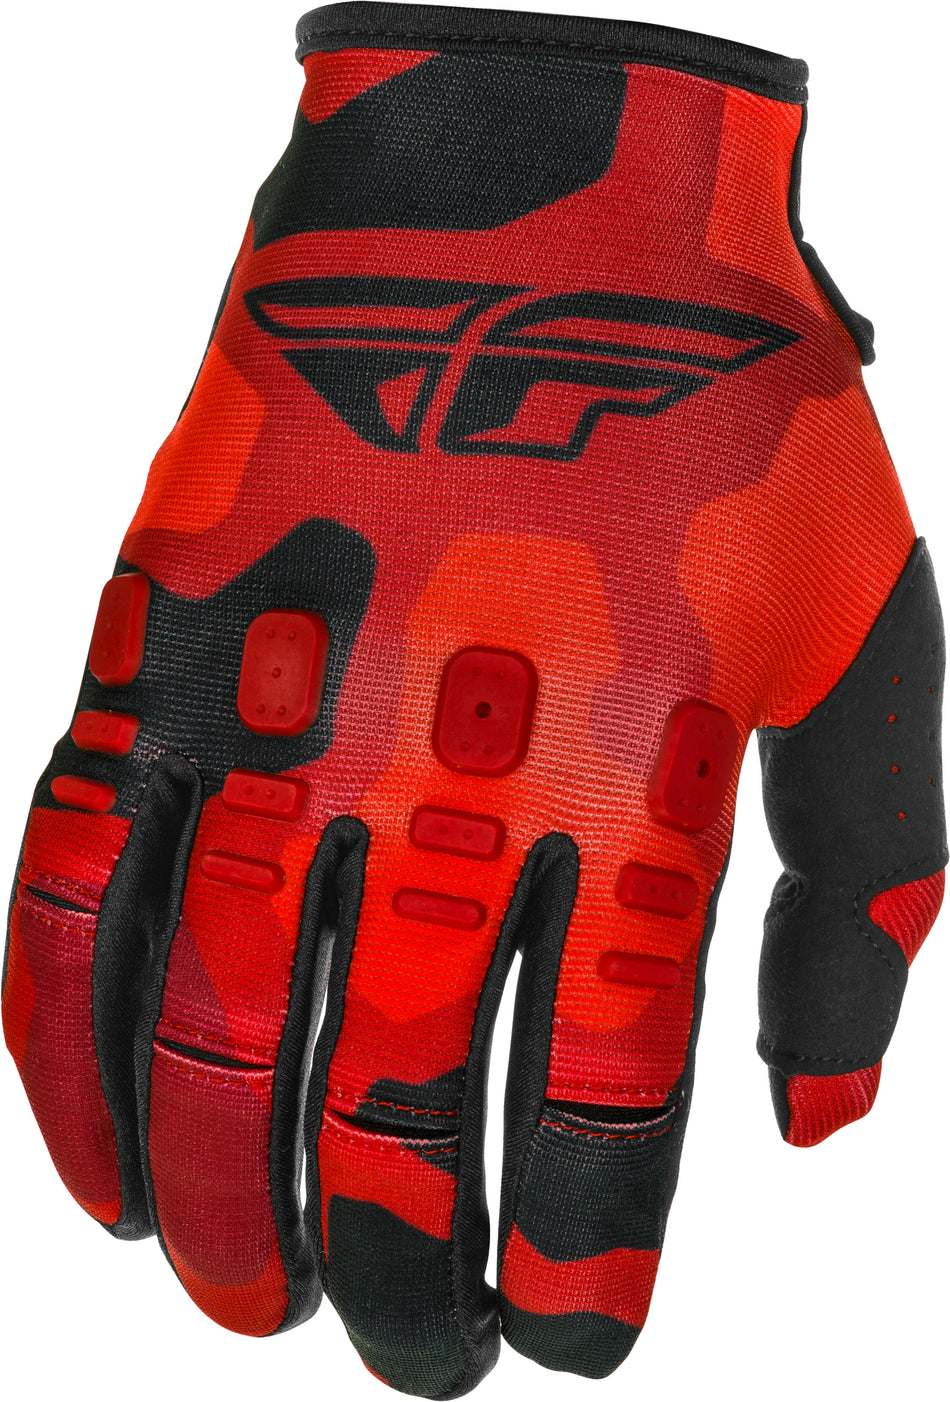 FLY RACING Kinetic K221 Gloves Red/Black Sz 09 374-51209